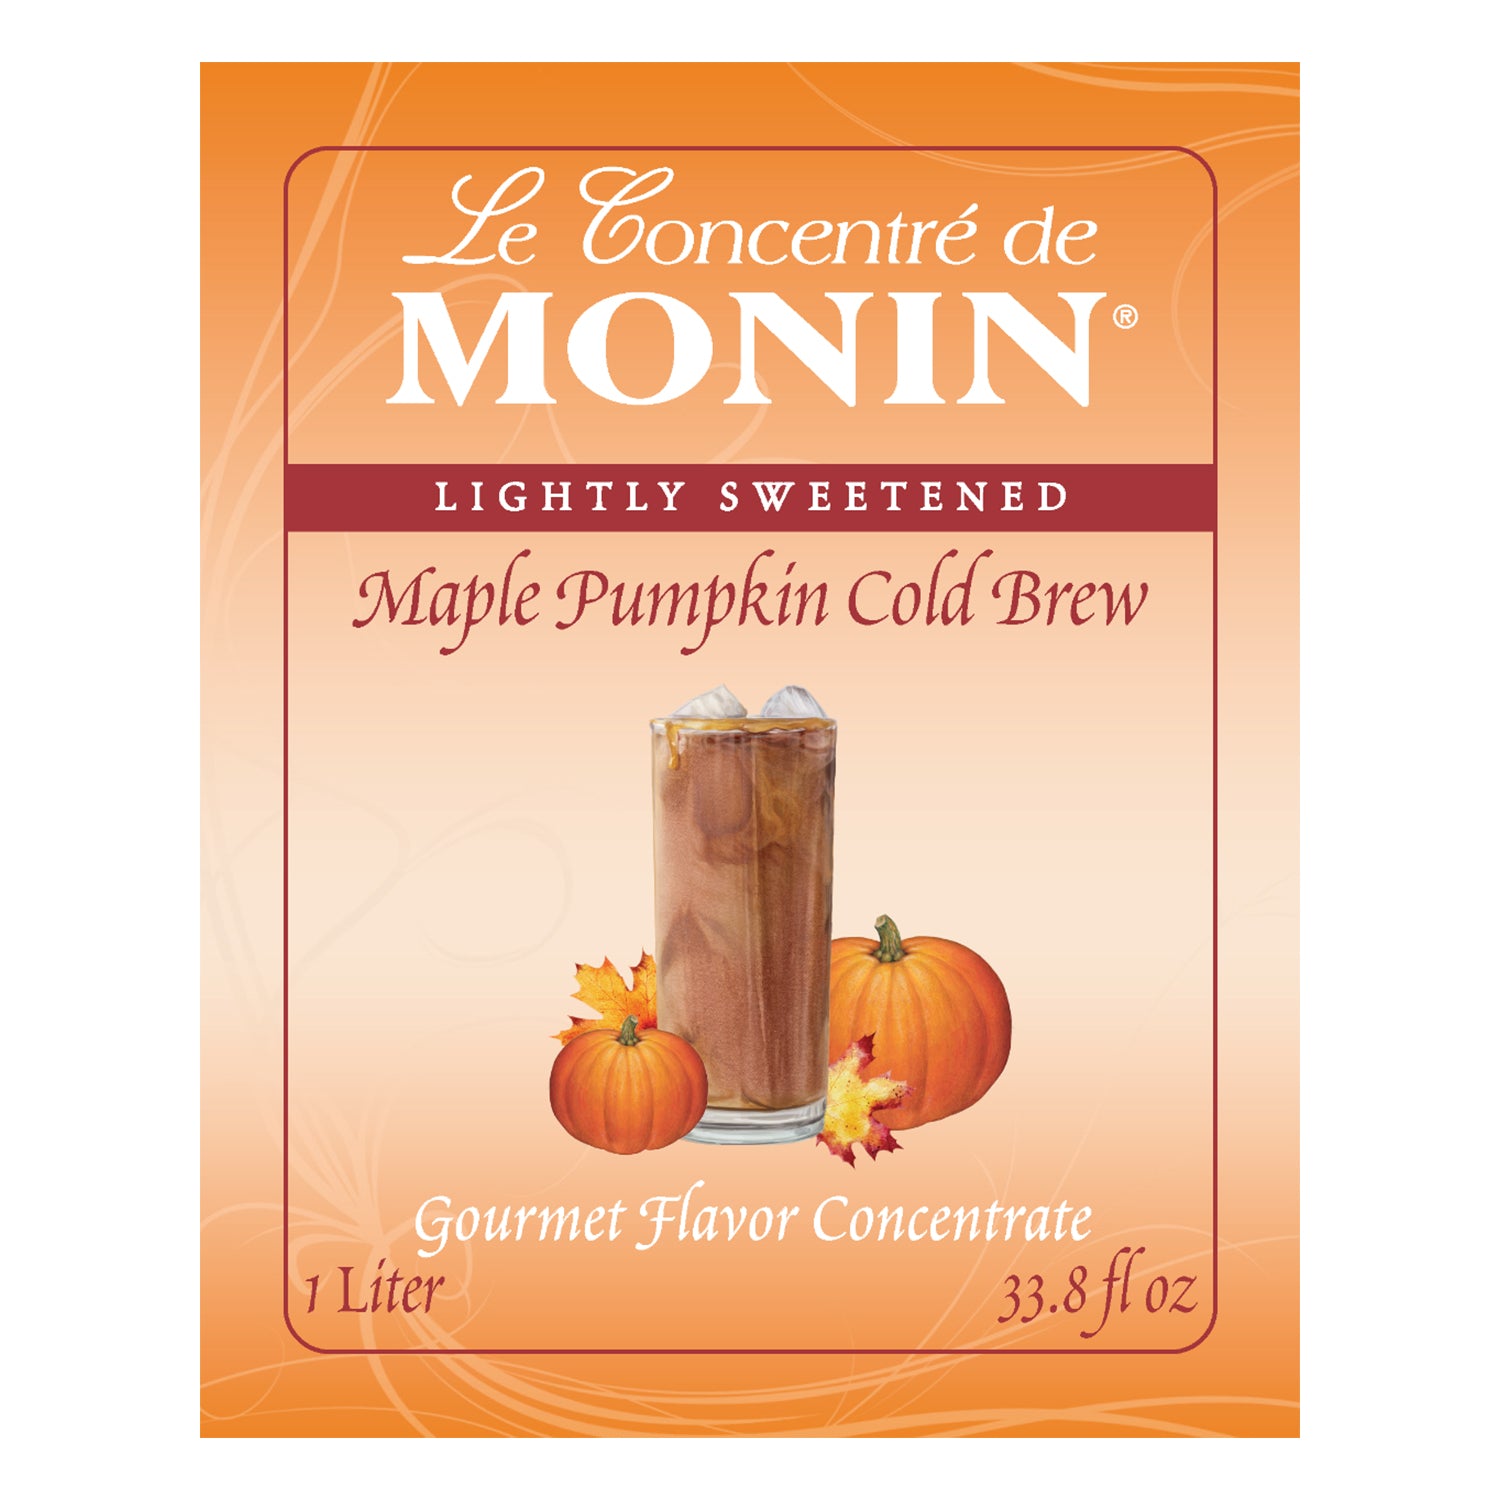 Monin Maple Pumpkin Cold Brew Concentrate brand label